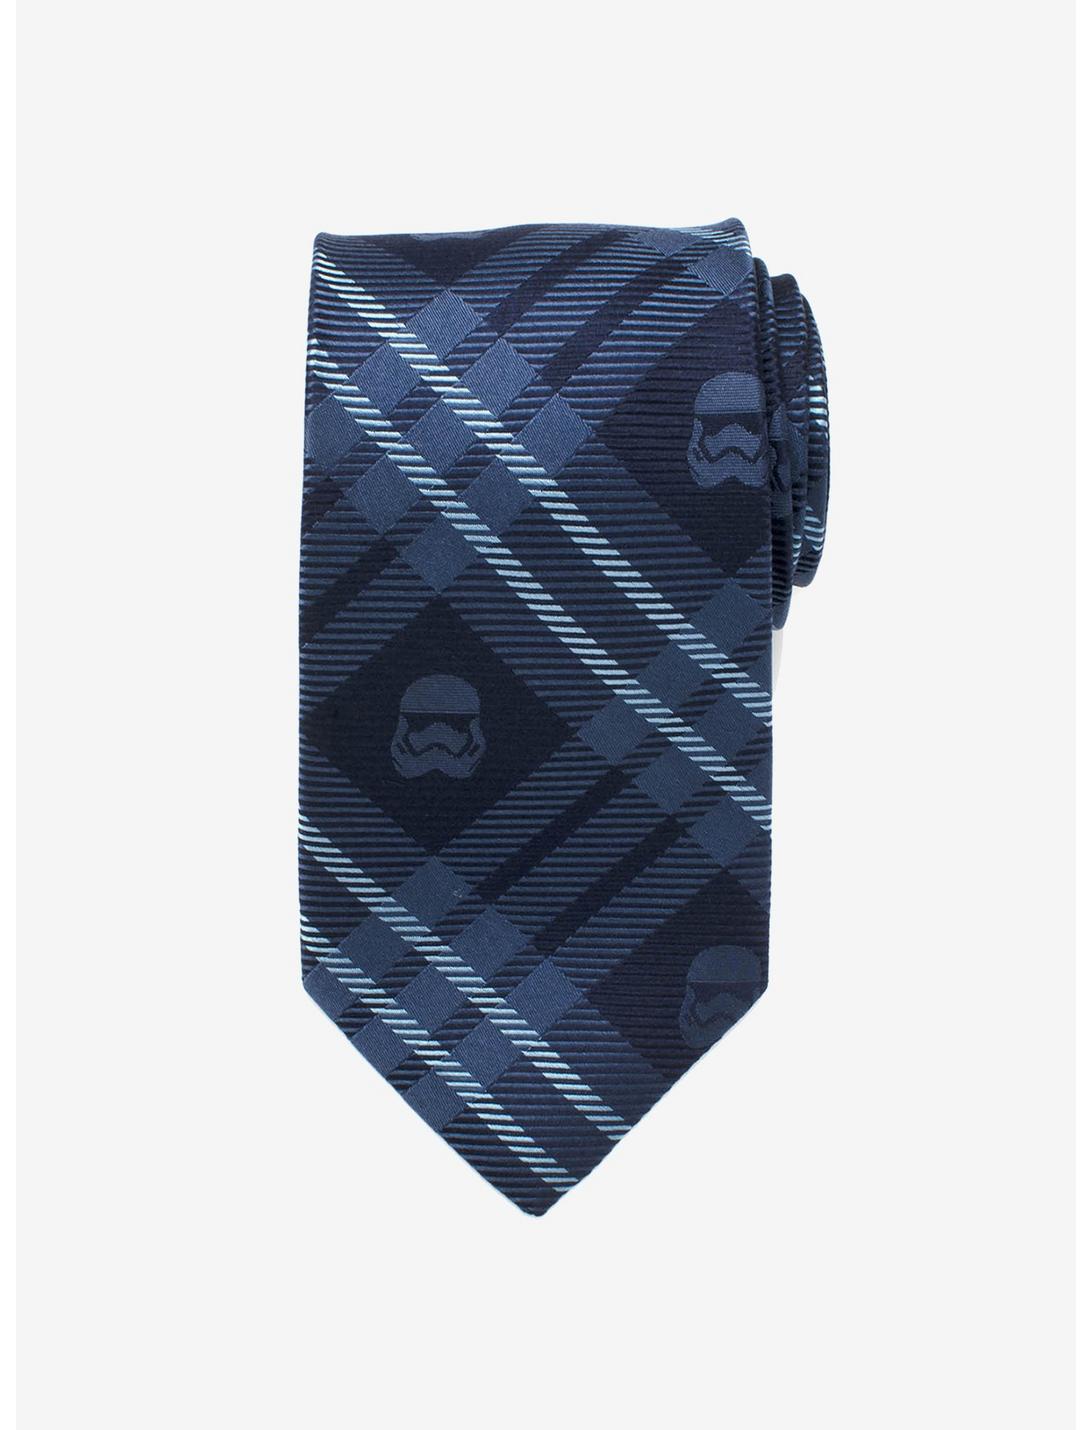 Star Wars Stormtrooper Navy Plaid Tie, , hi-res